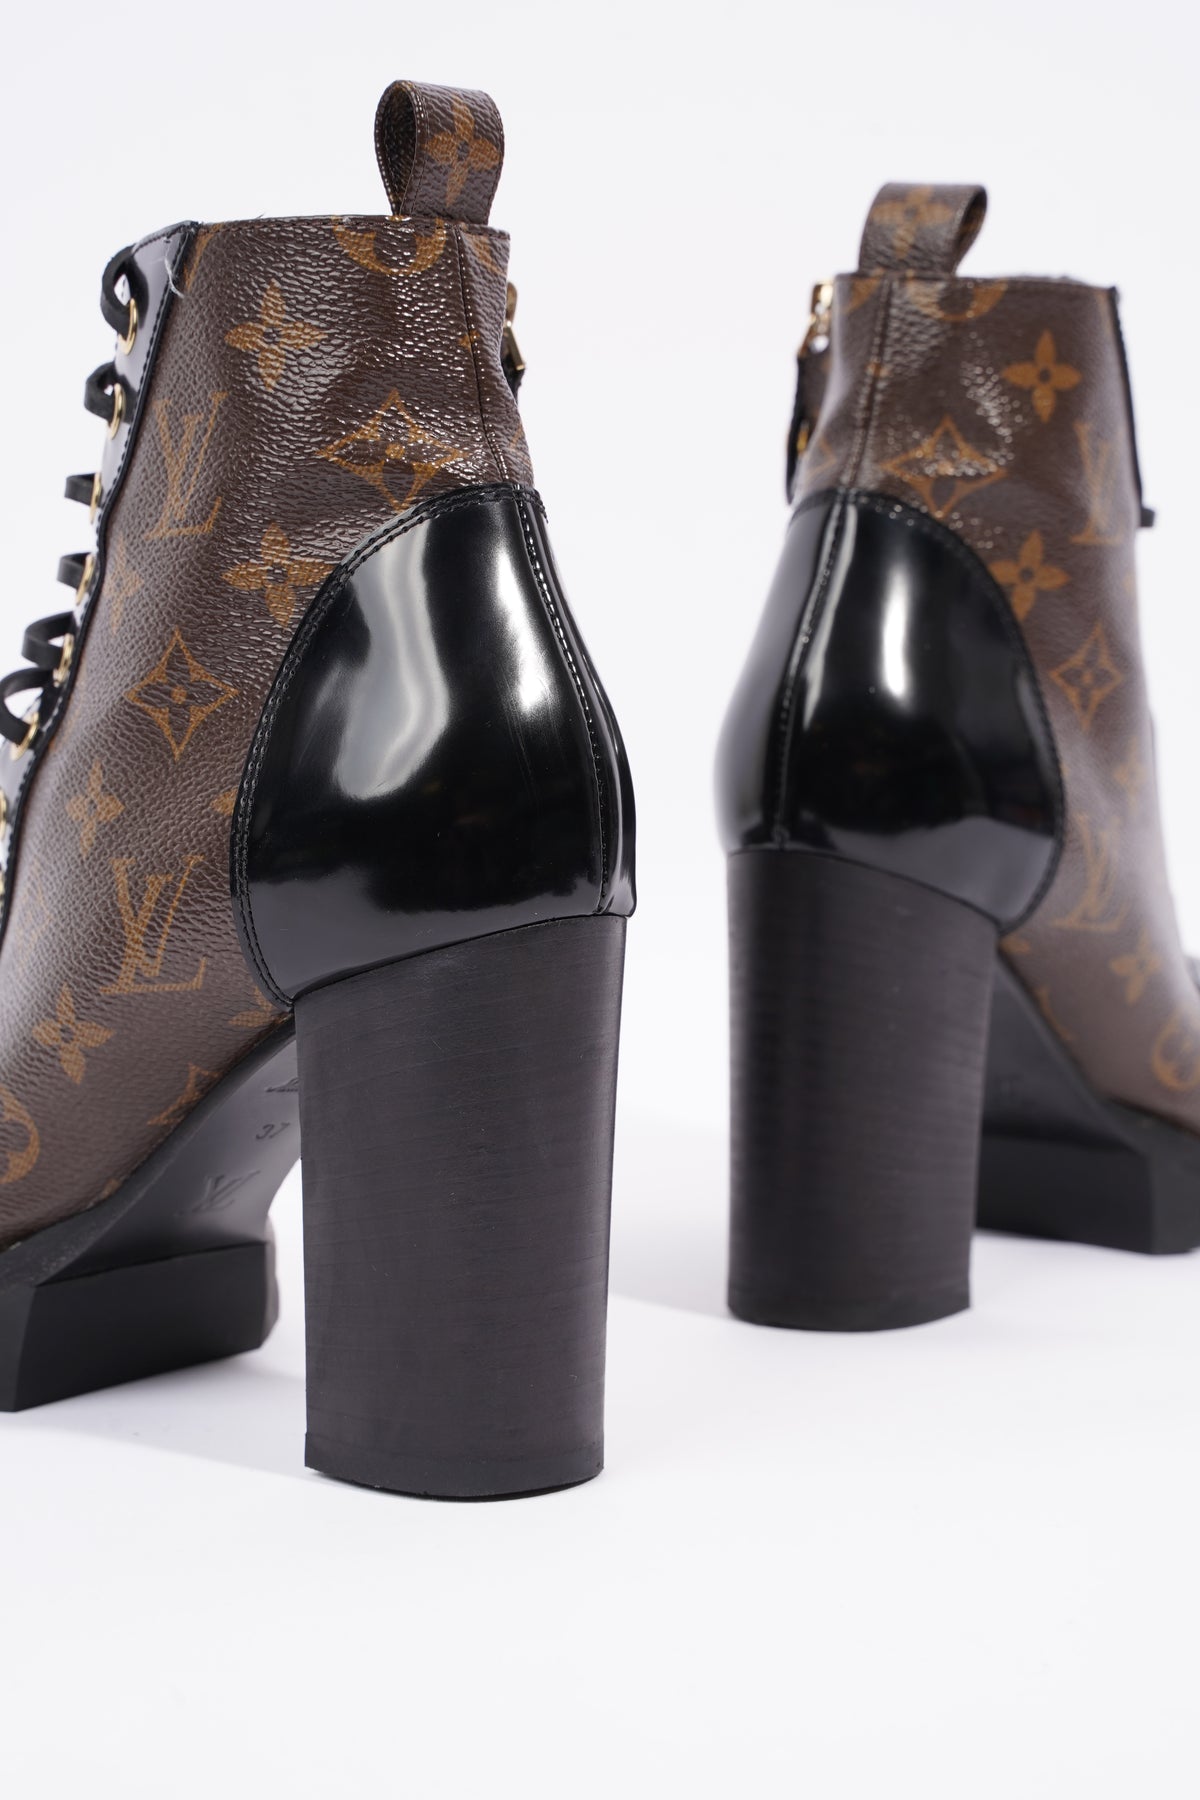 Louis Vuitton Star Trail Ankle Boot NWT Size 40 EU/ 9.5 US Women's